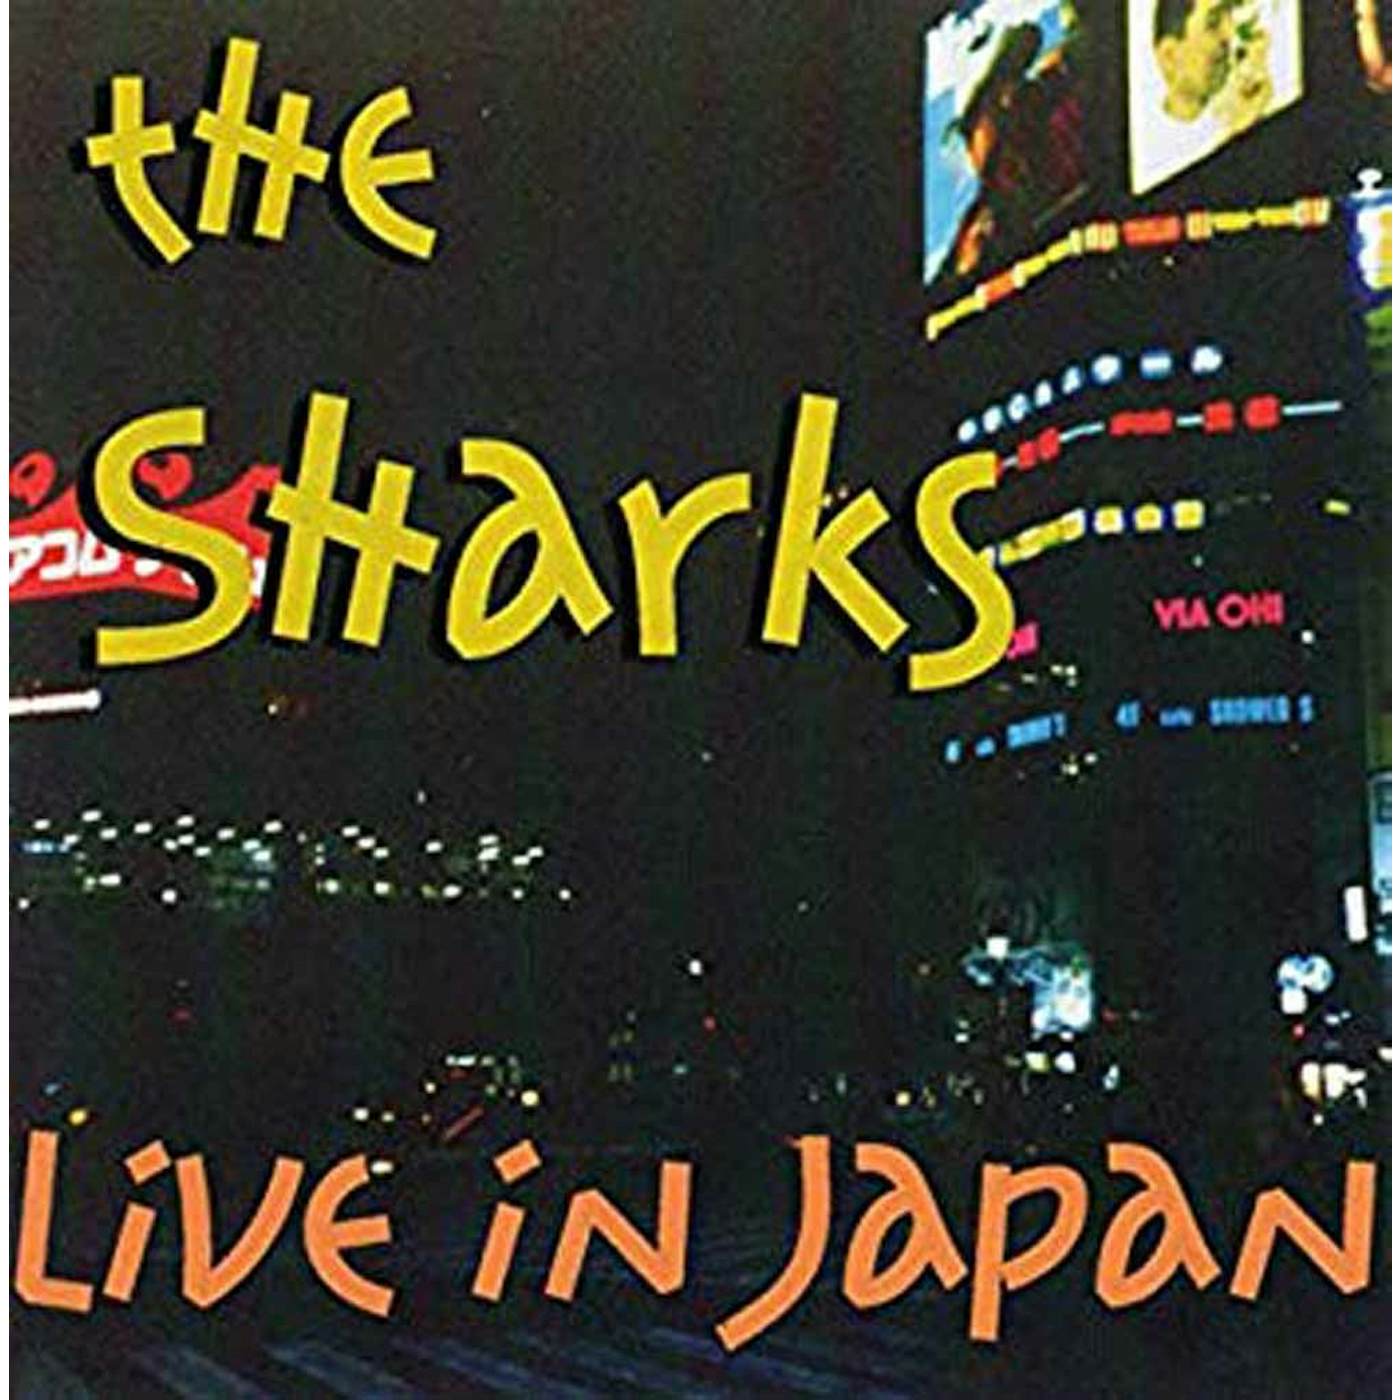 Sharks LP - Live In Japan (Picture Disc) (Vinyl)